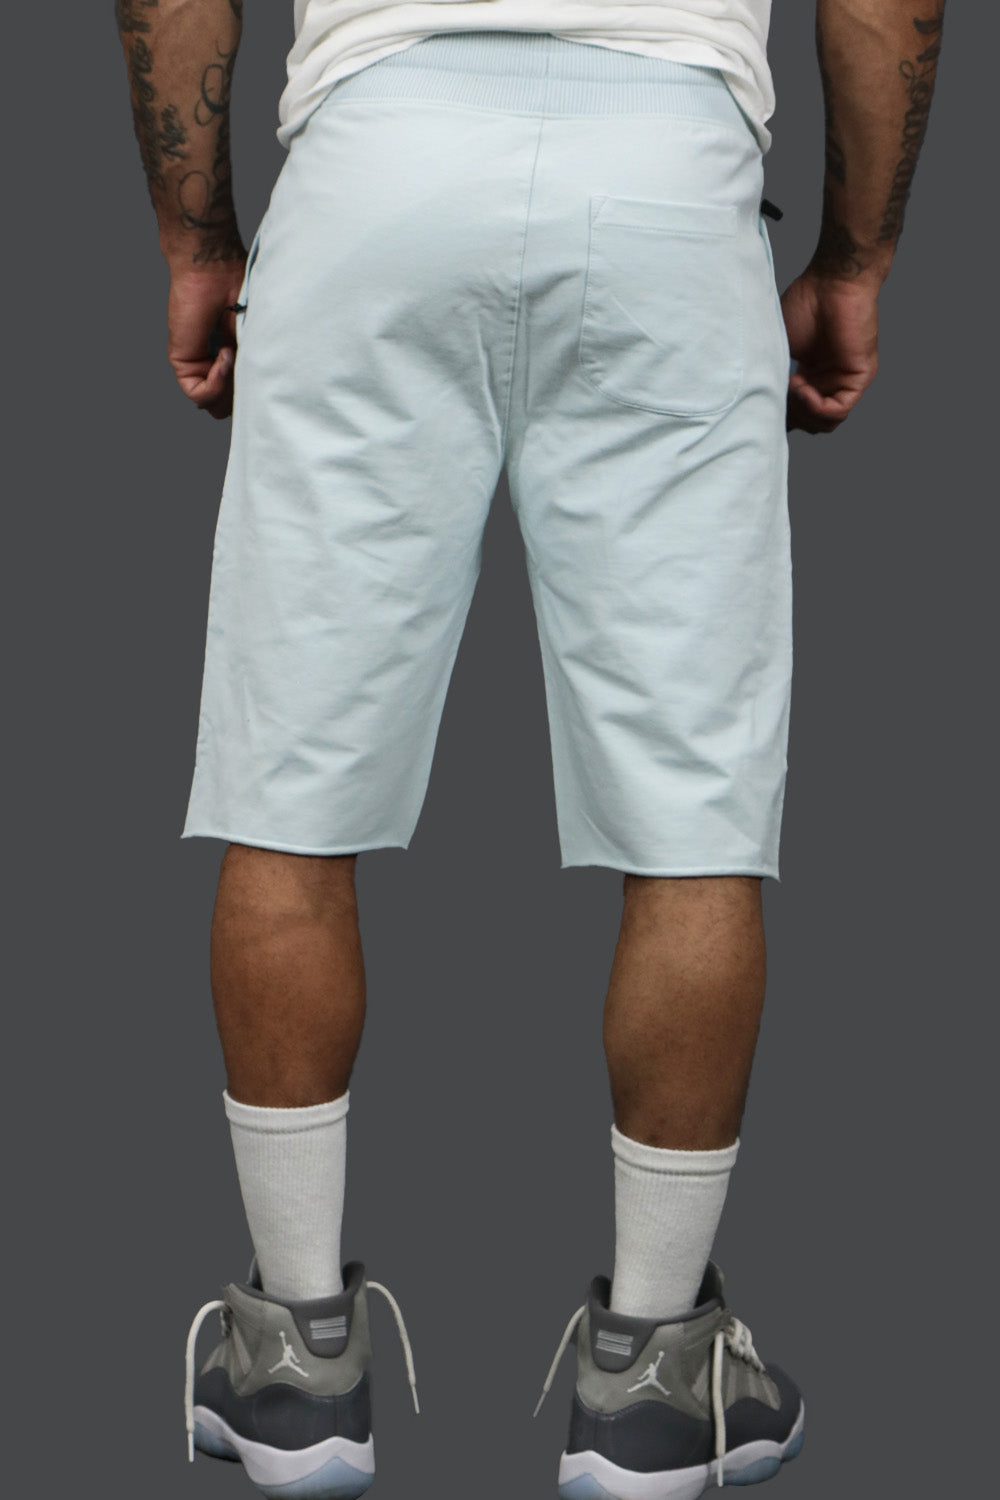 The backside of the Men’s Fleece Shorts with Zipper Pocket | Jordan Craig Sky Foam